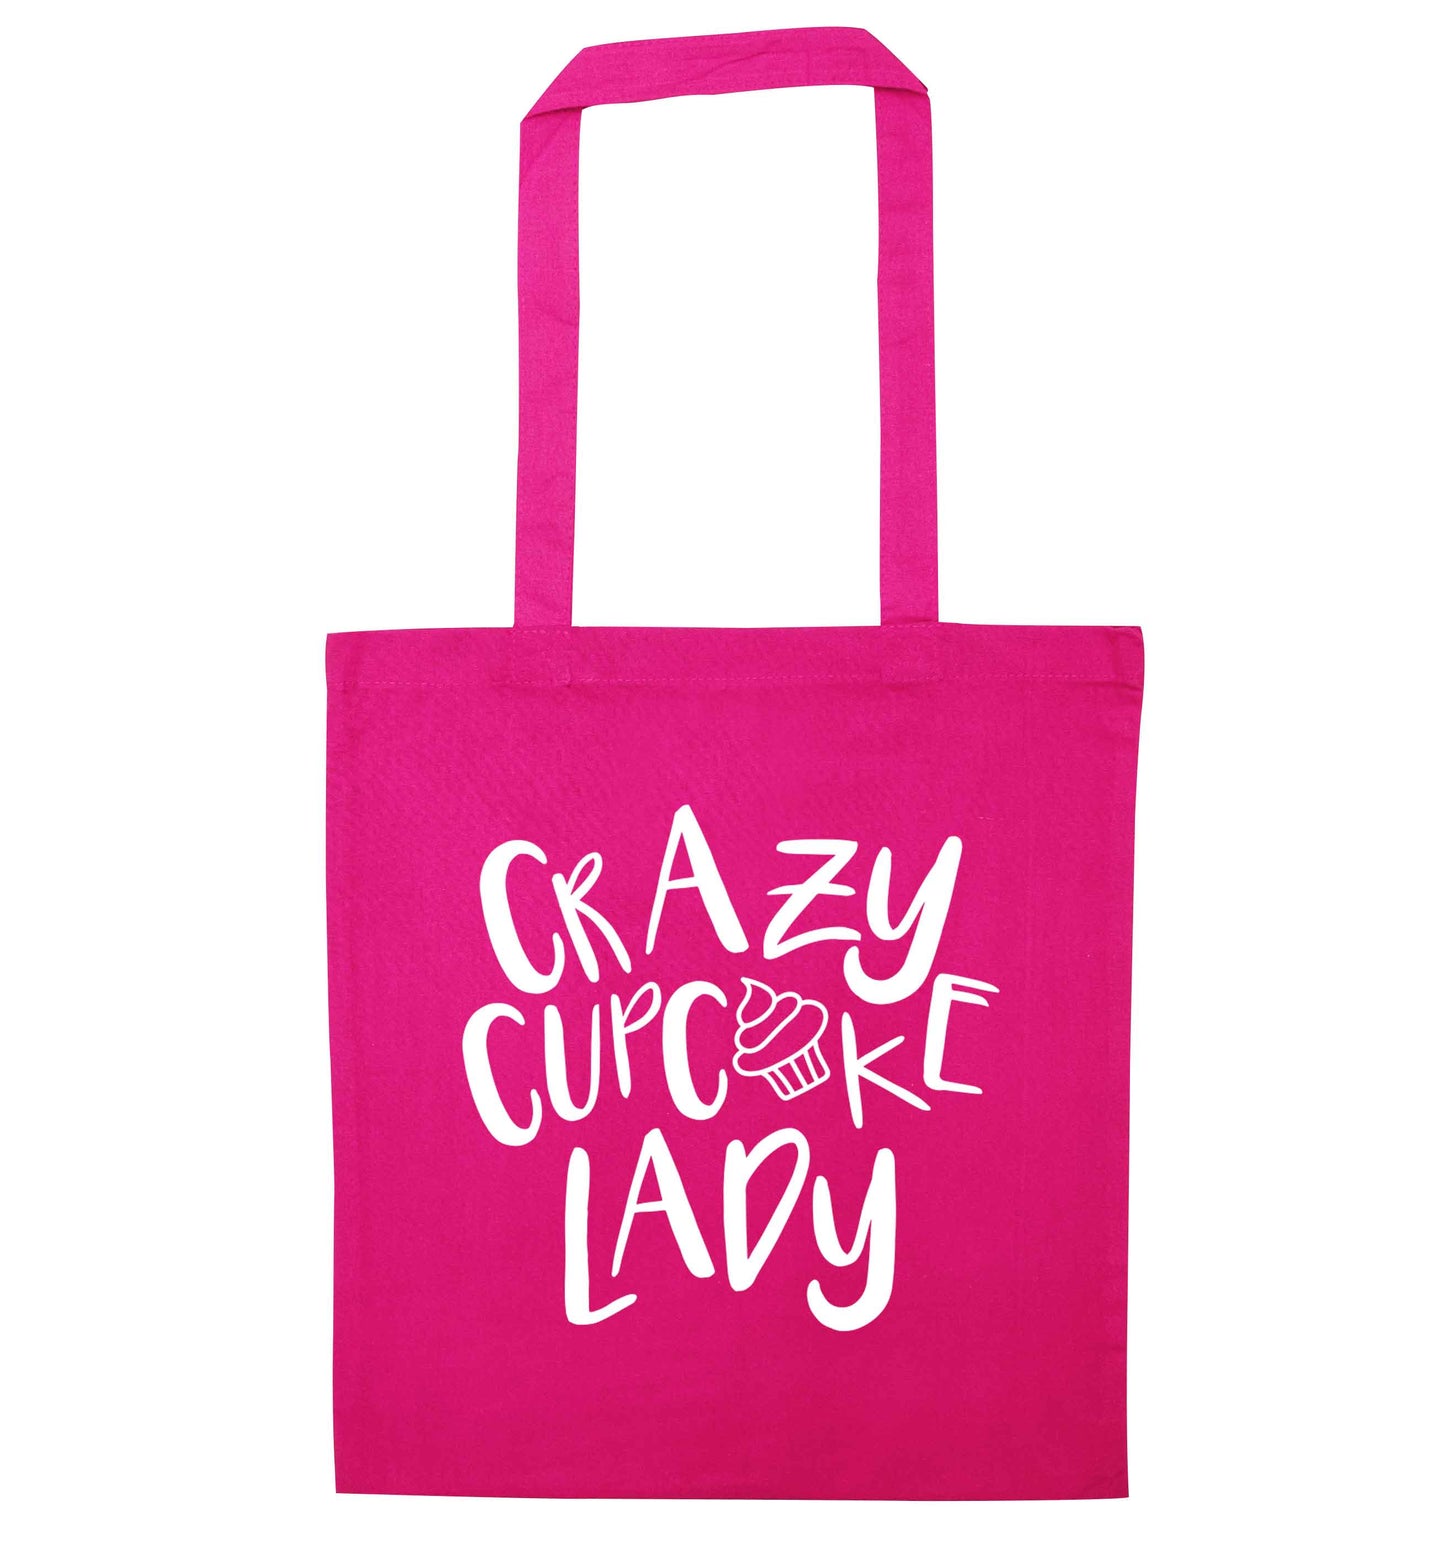 Crazy cupcake lady pink tote bag